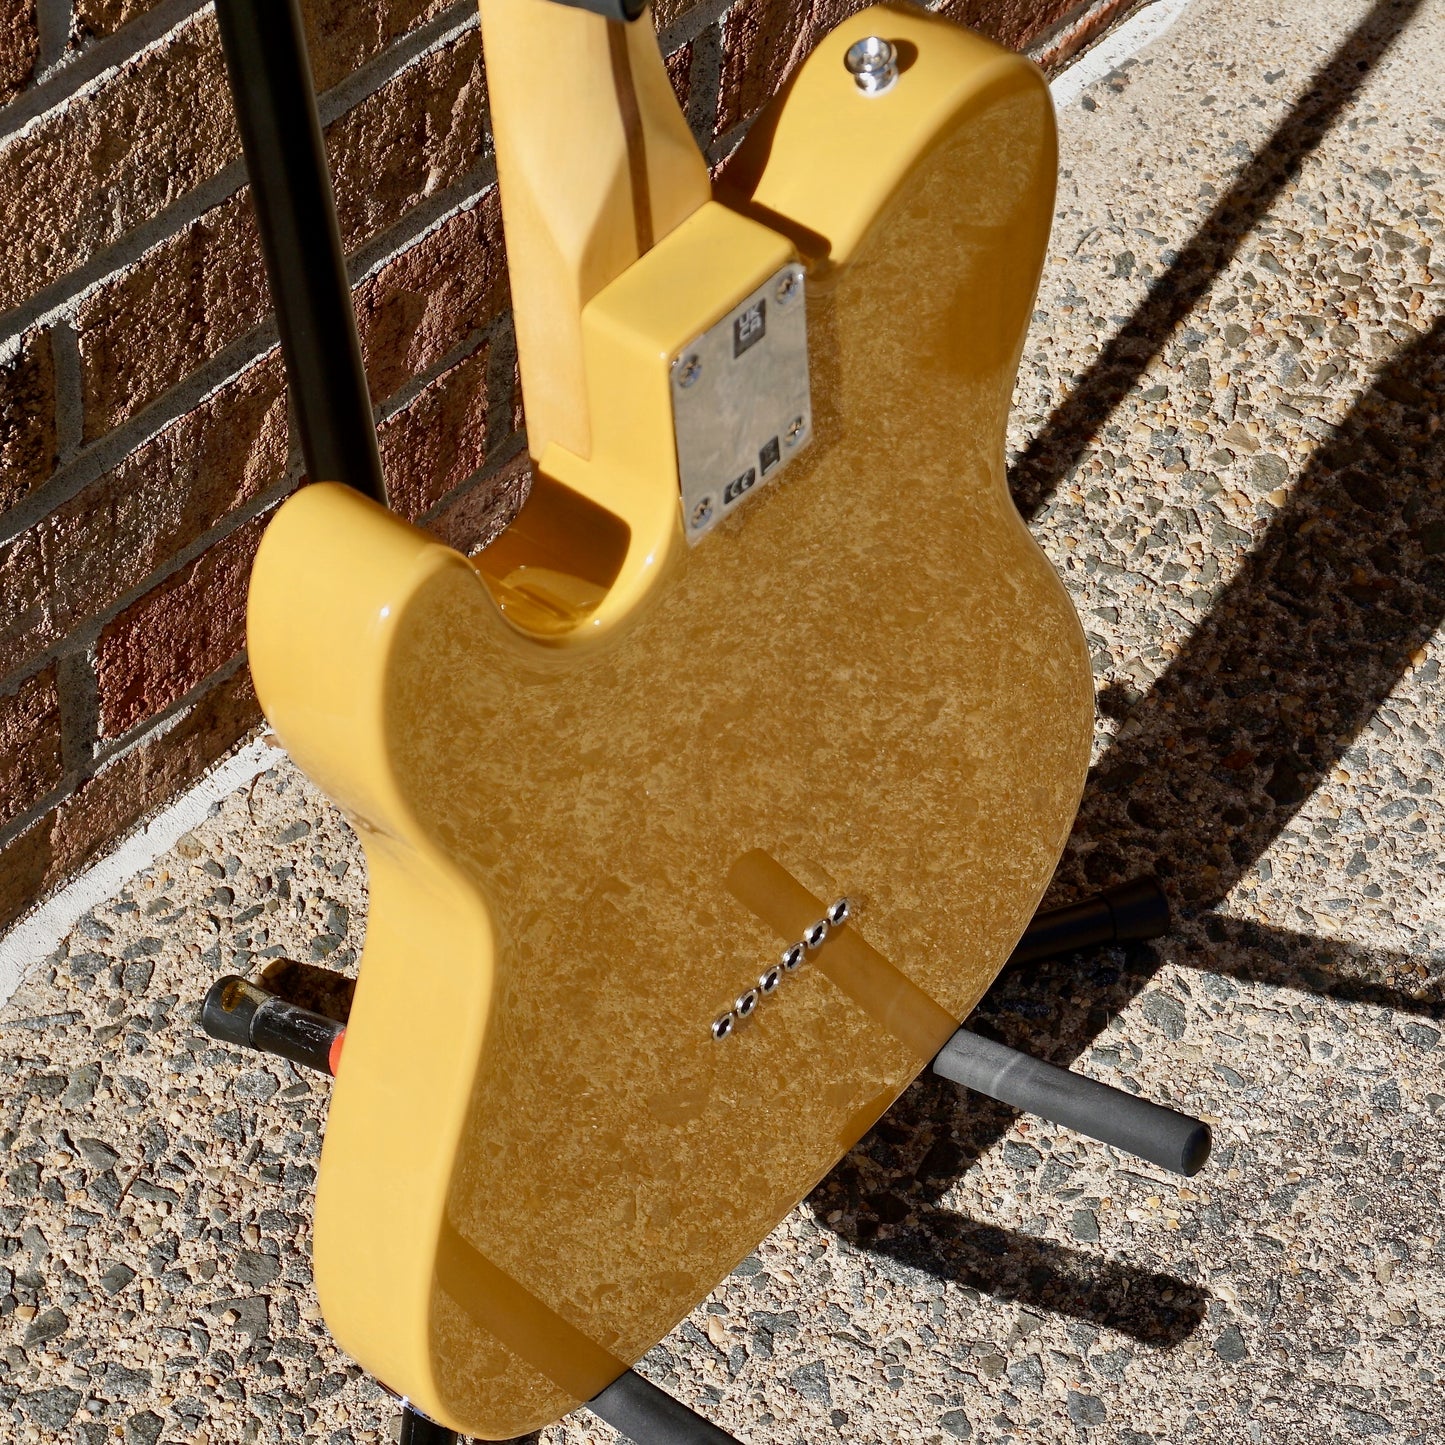 Fender Player Telecaster Maple Fingerboard Butterscotch Blonde